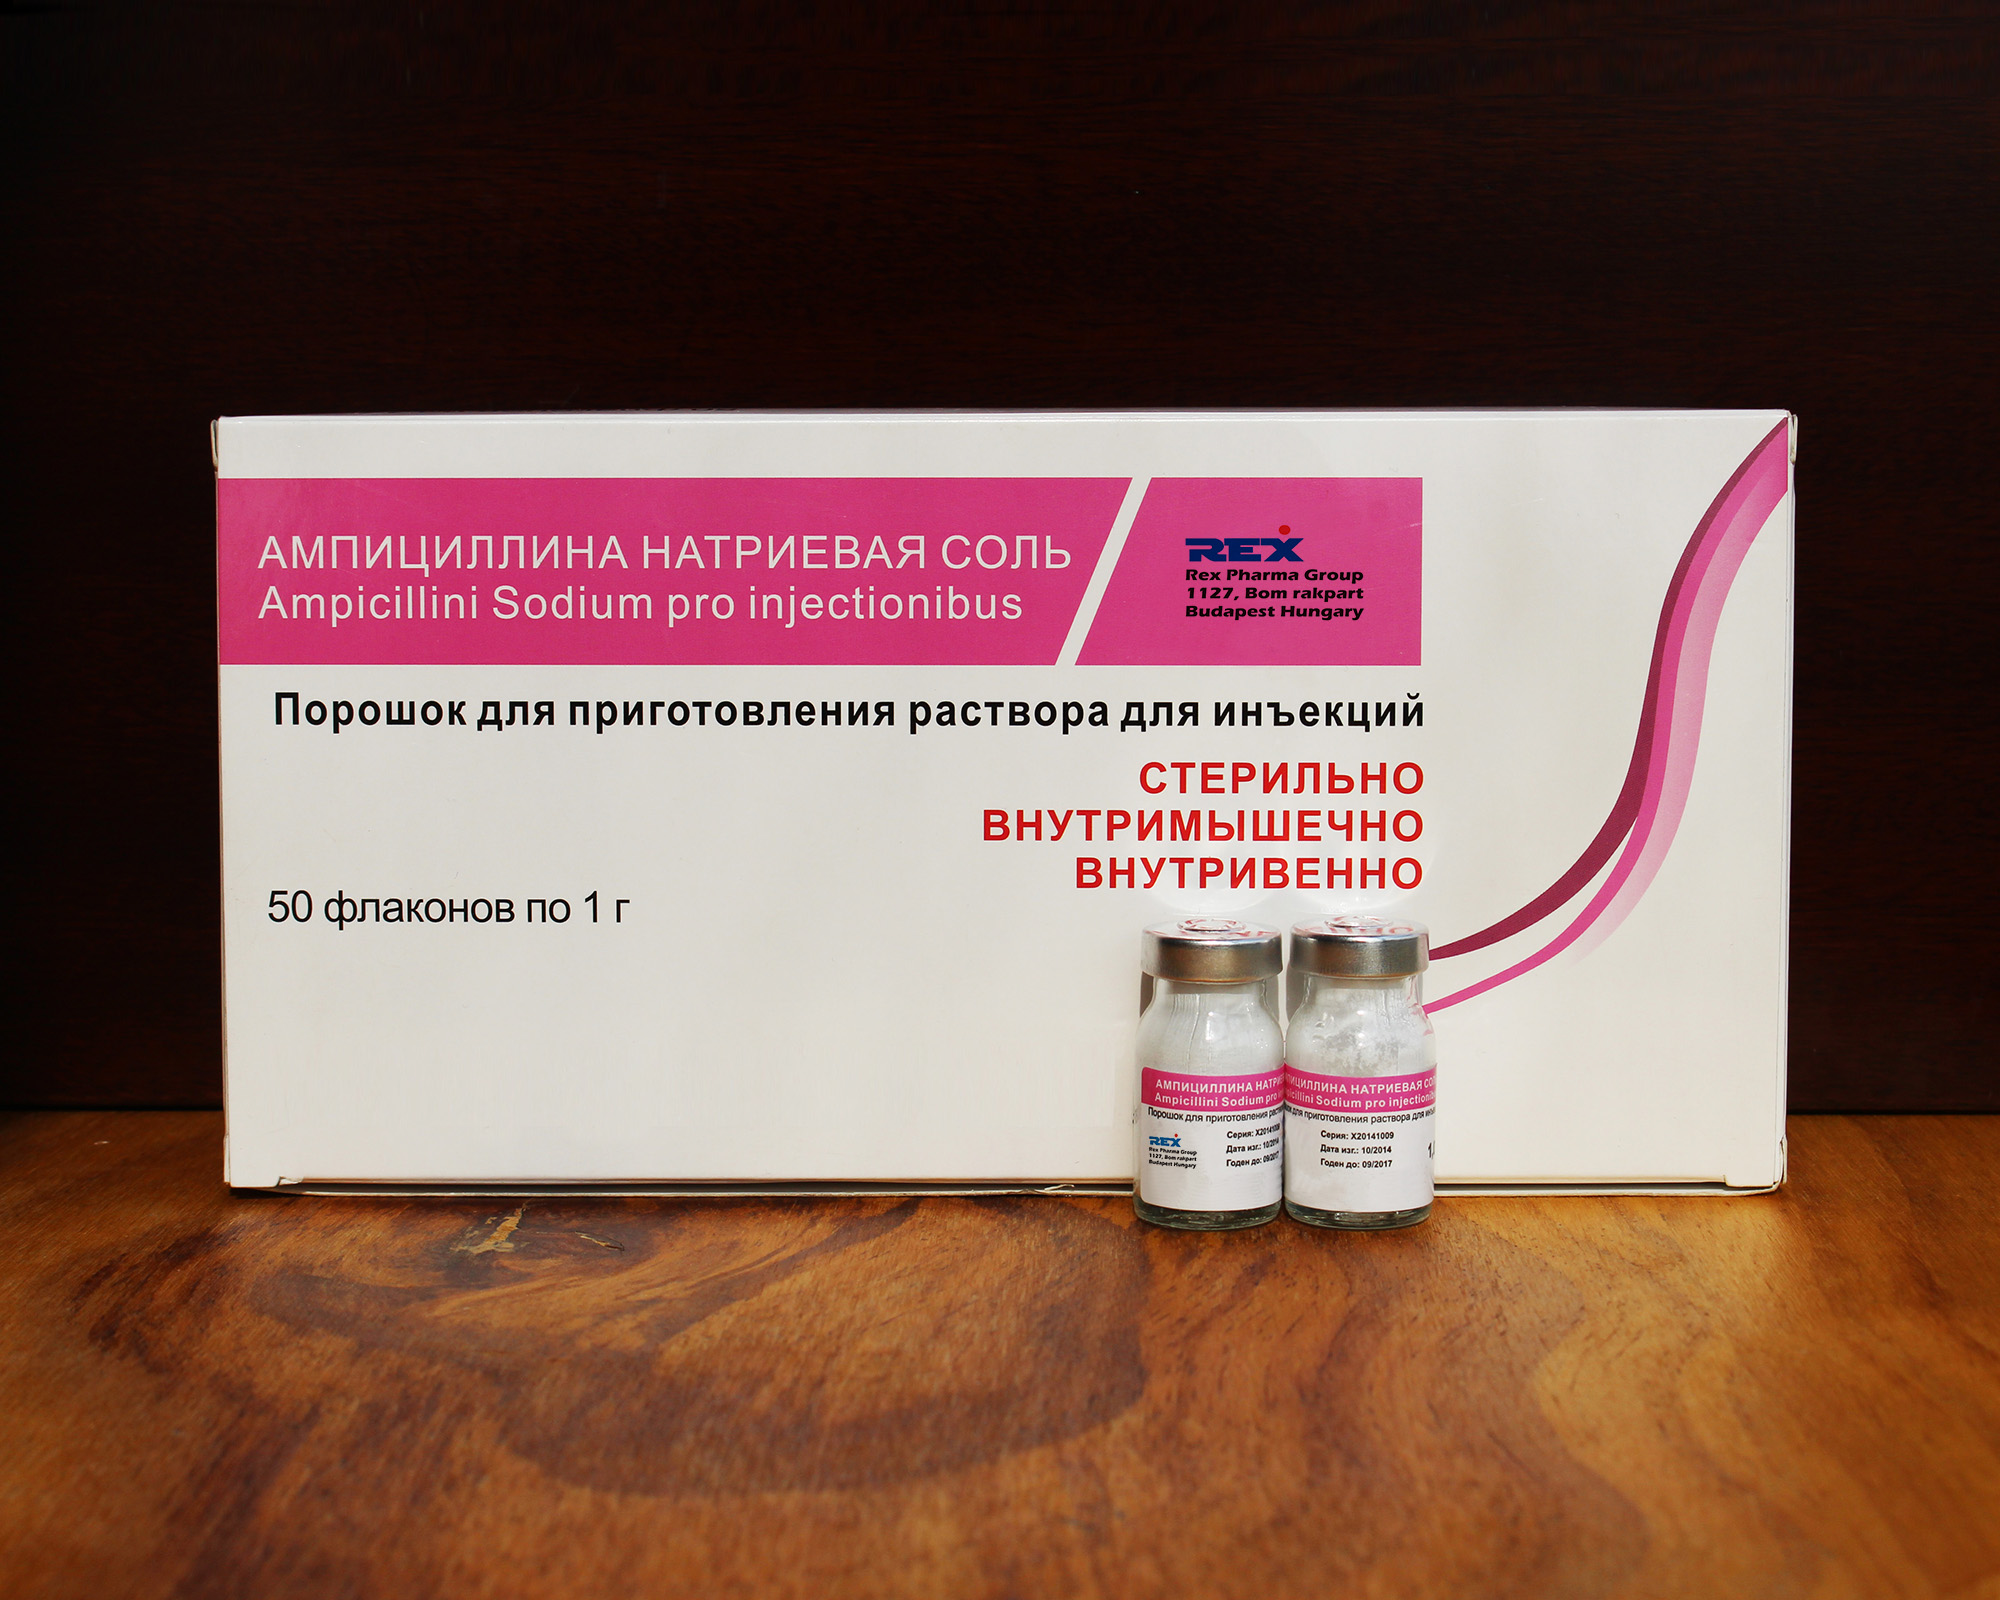 ampicillin sodium for injection